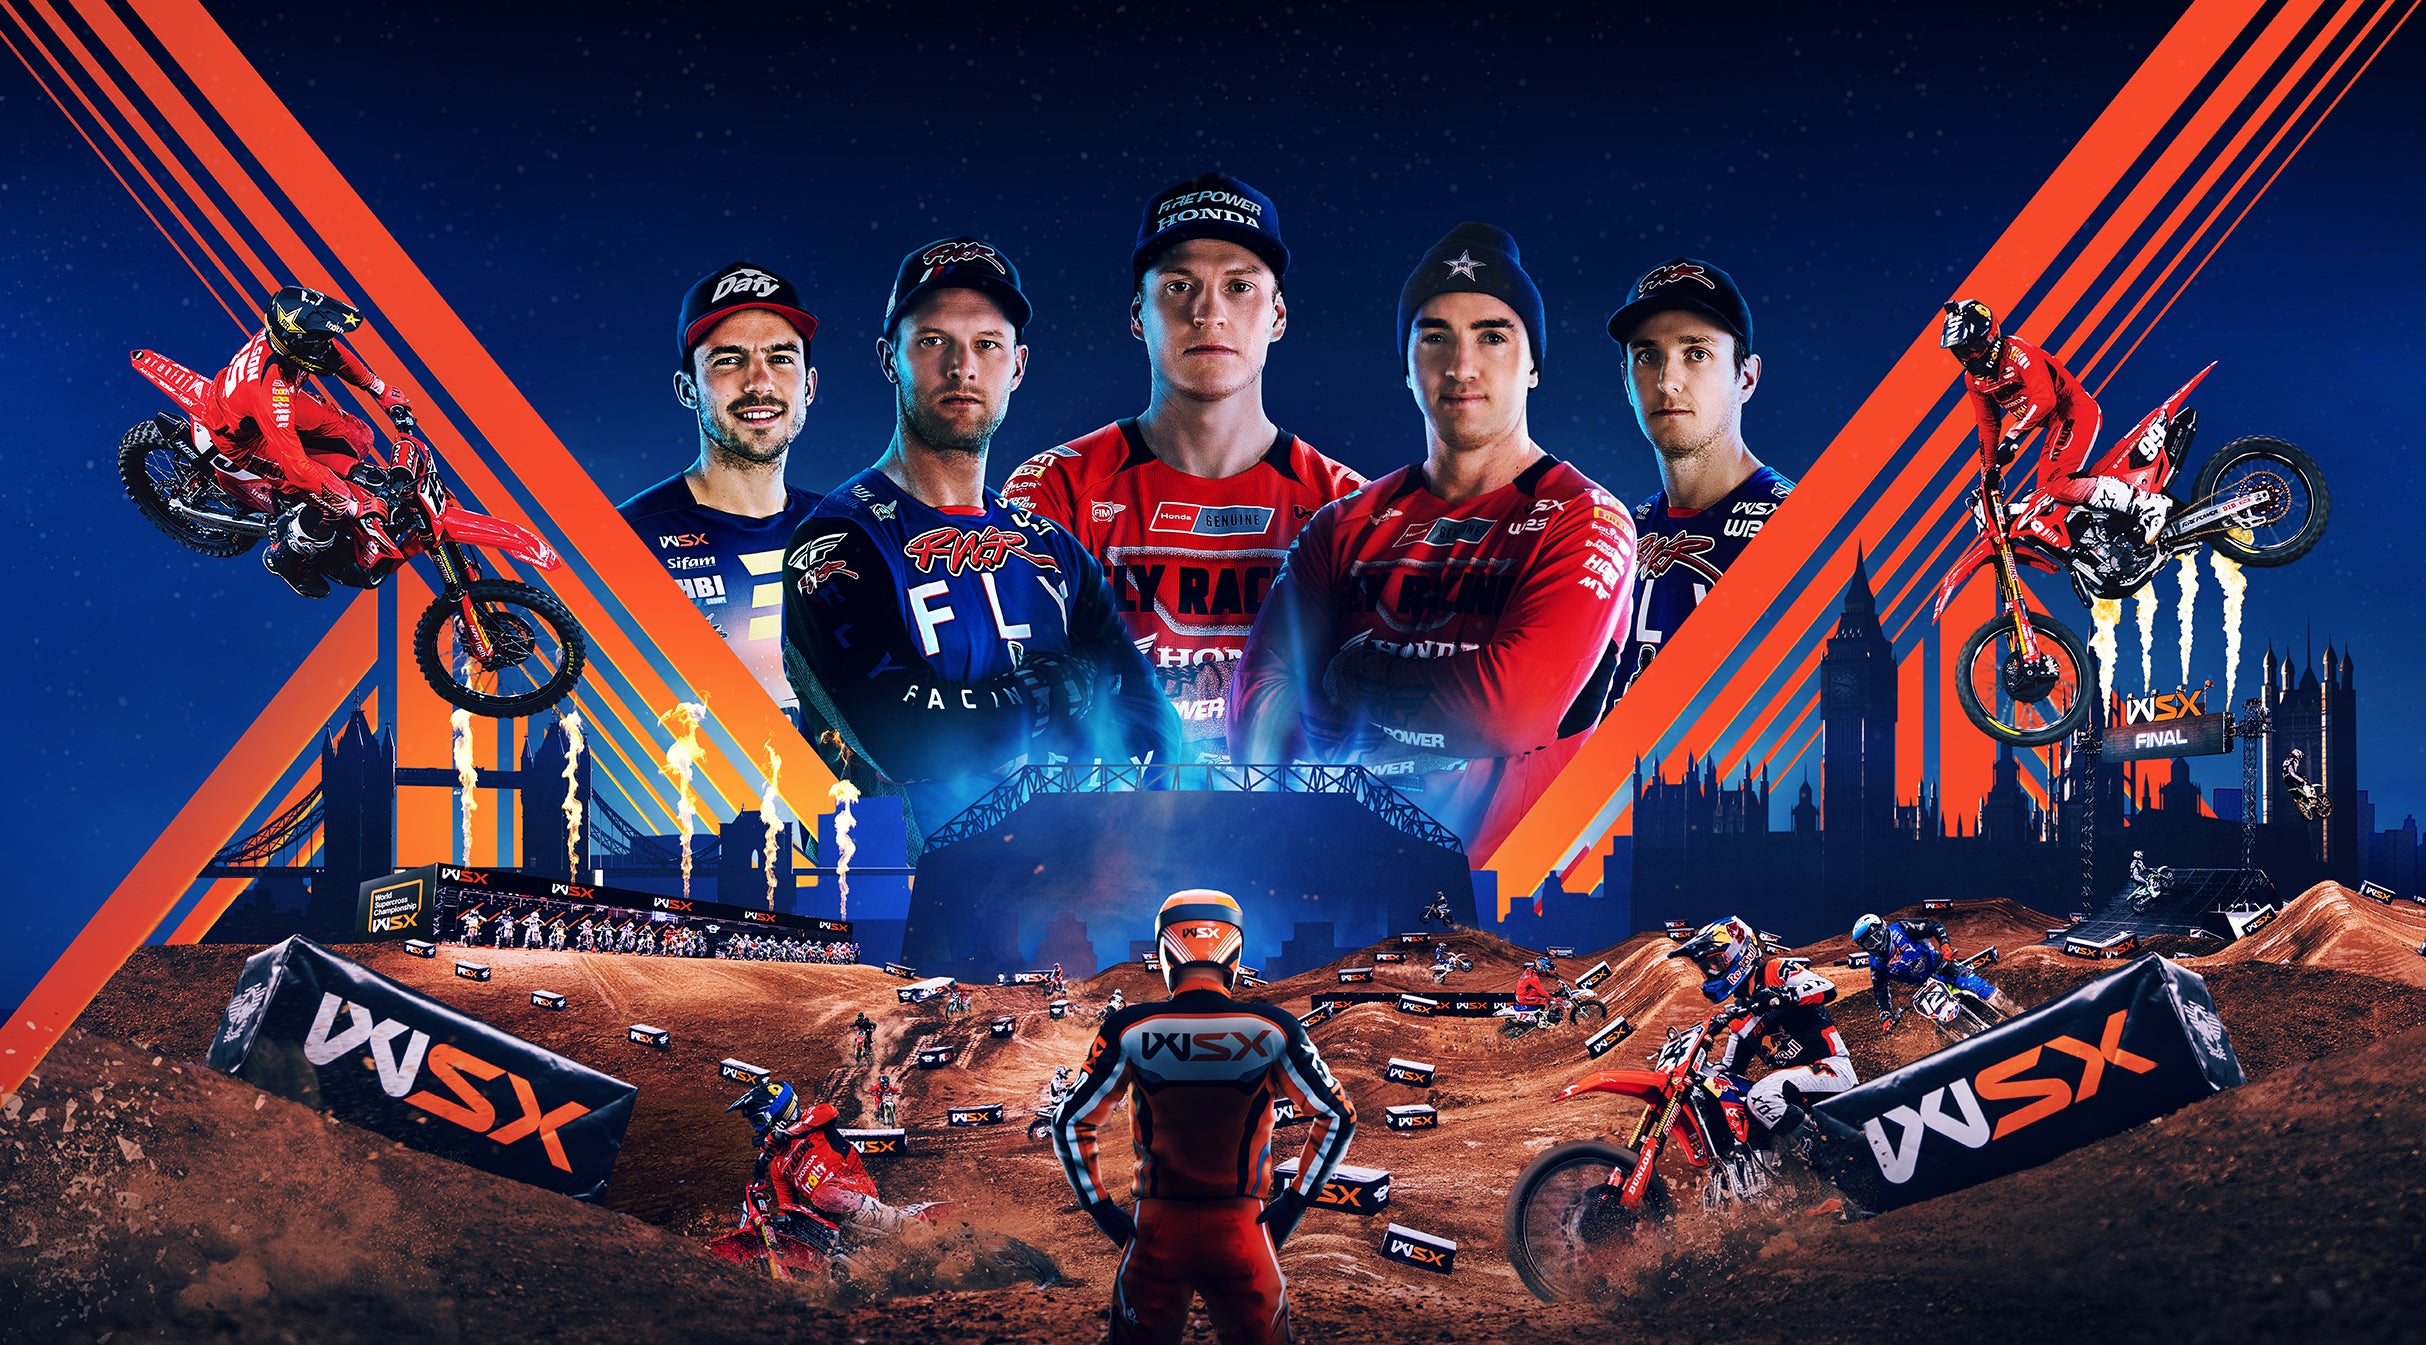 FIM World Supercross British Grand Prix in Birmingham promo photo for Live Nation presale offer code